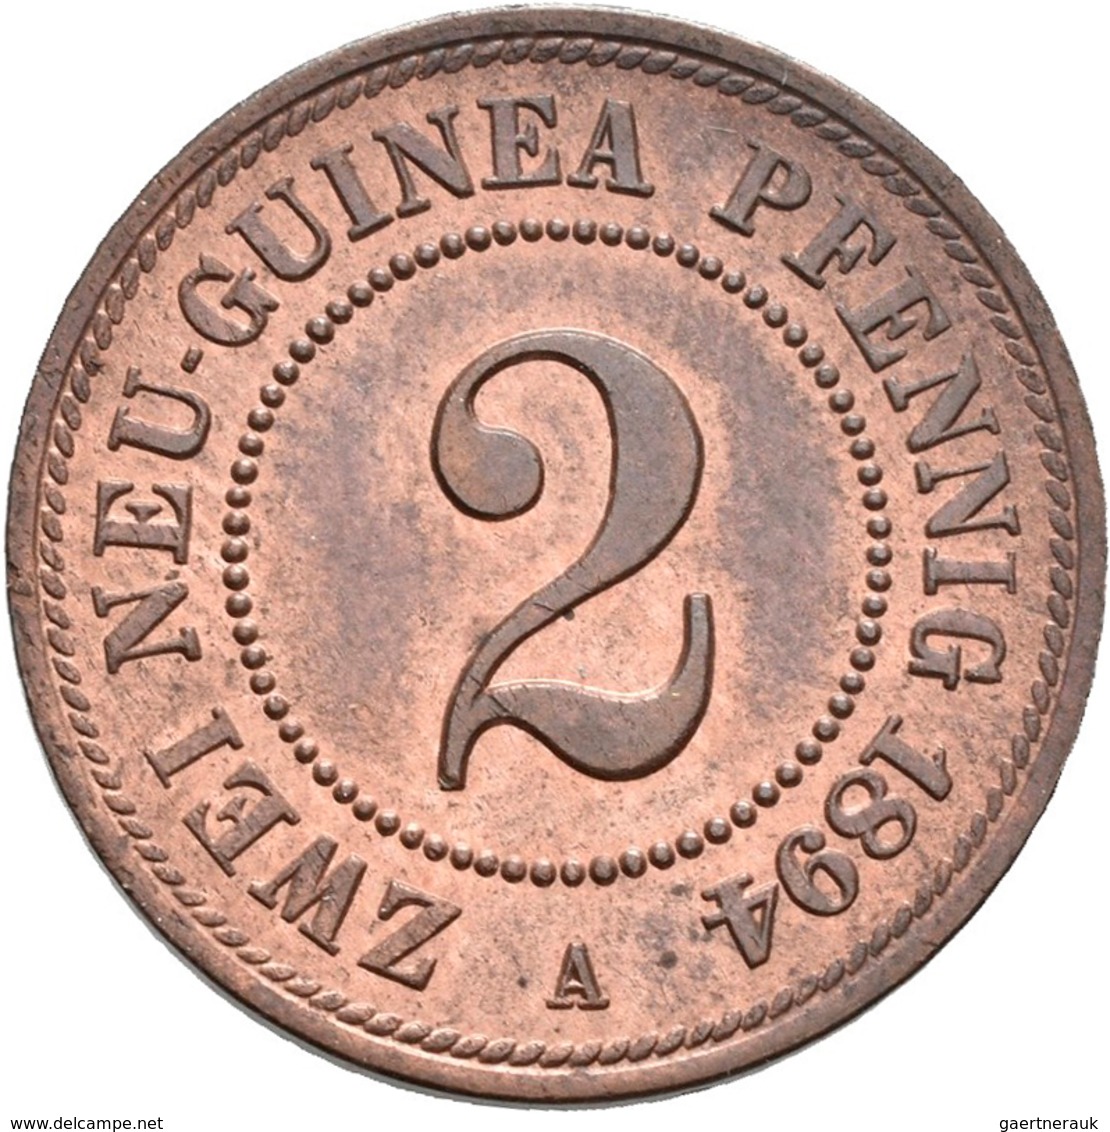 Deutsch-Neuguinea: 2 Neu-Guinea Pfennig 1894 A, Jaeger 702, Leichte Patina, Vorzüglich. - German New Guinea